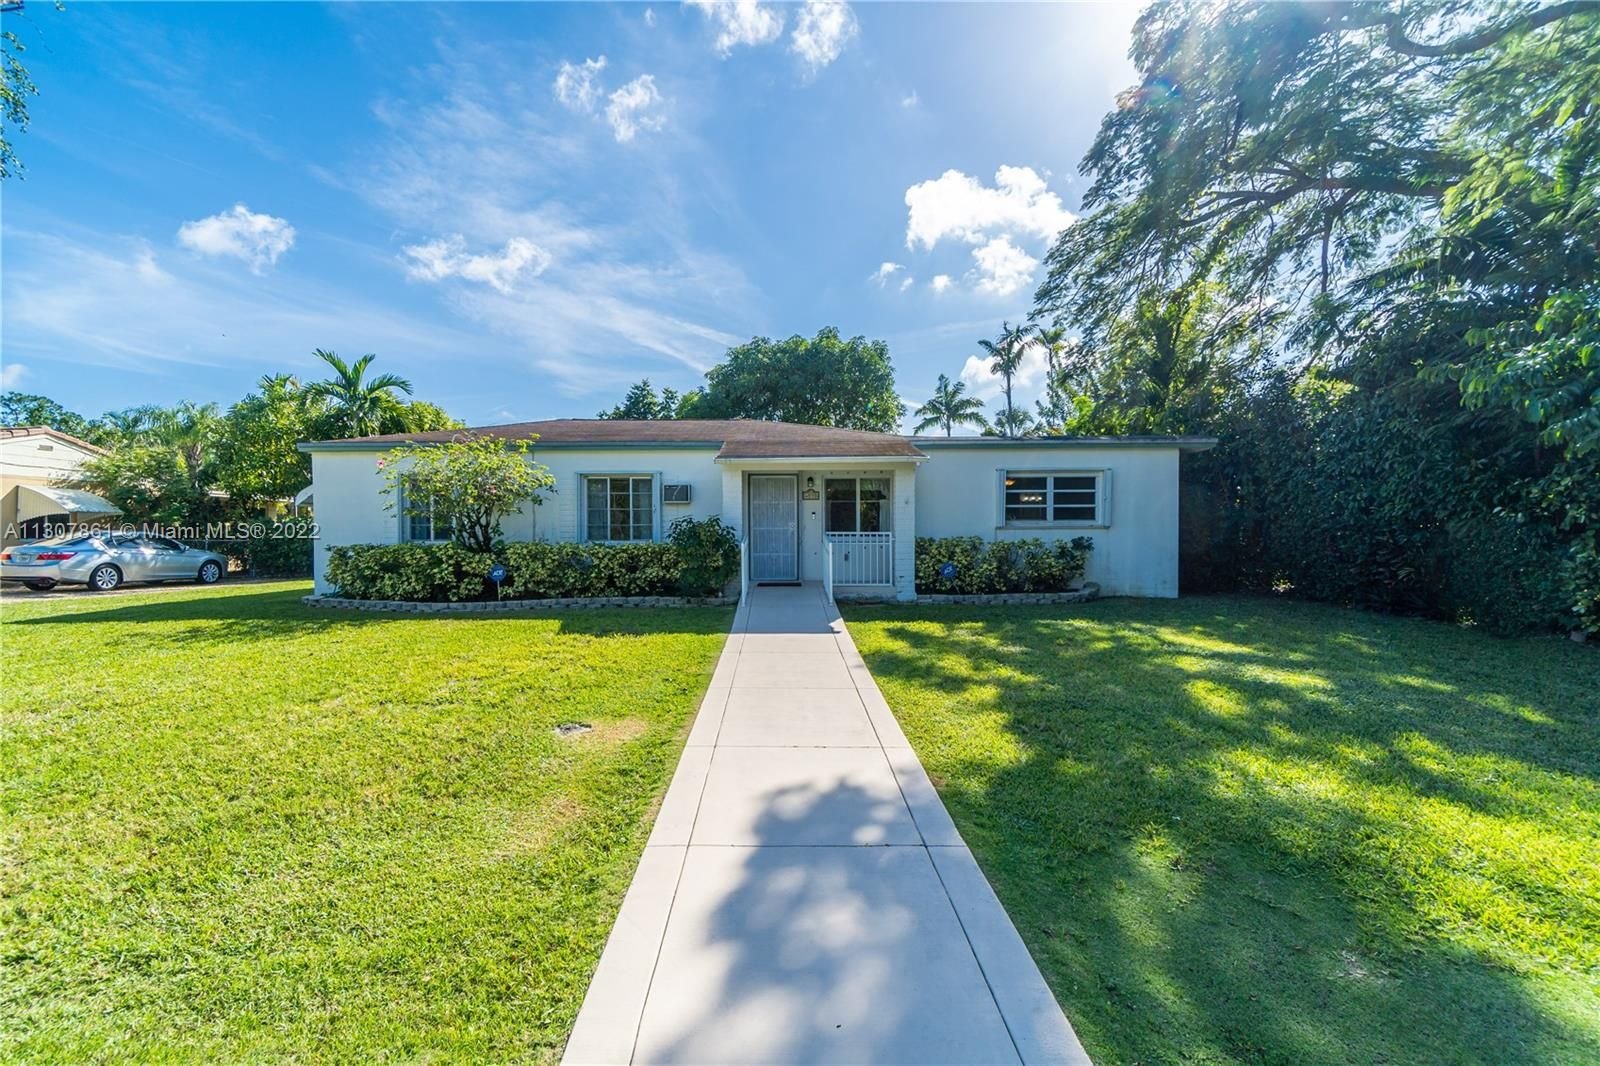 Real estate property located at 6530 45th St, Miami-Dade County, Miami, FL